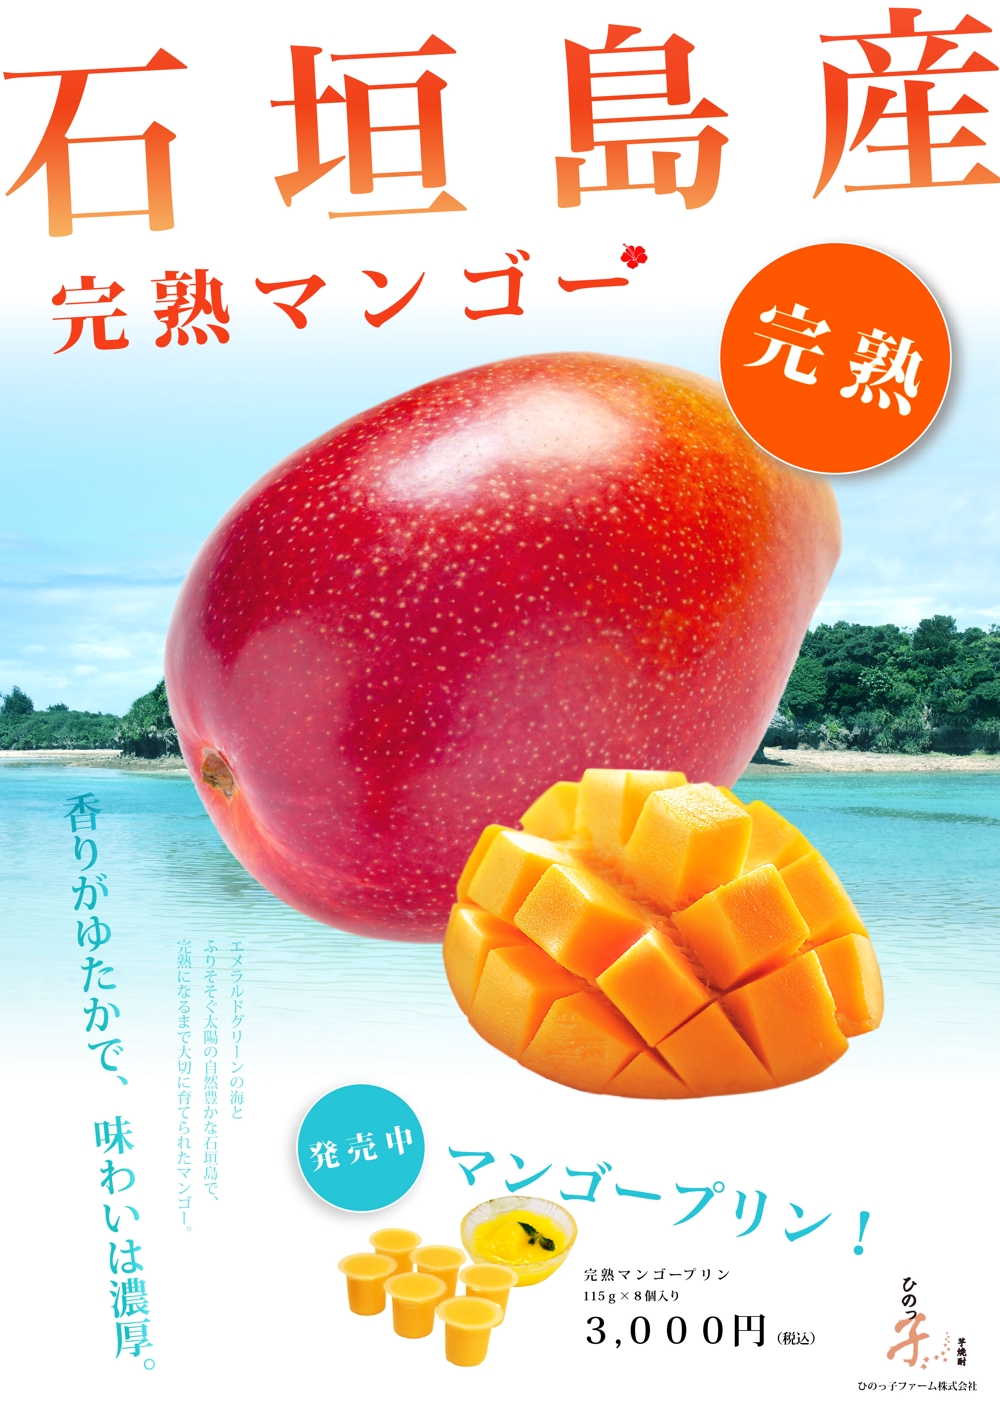 mango01.jpg